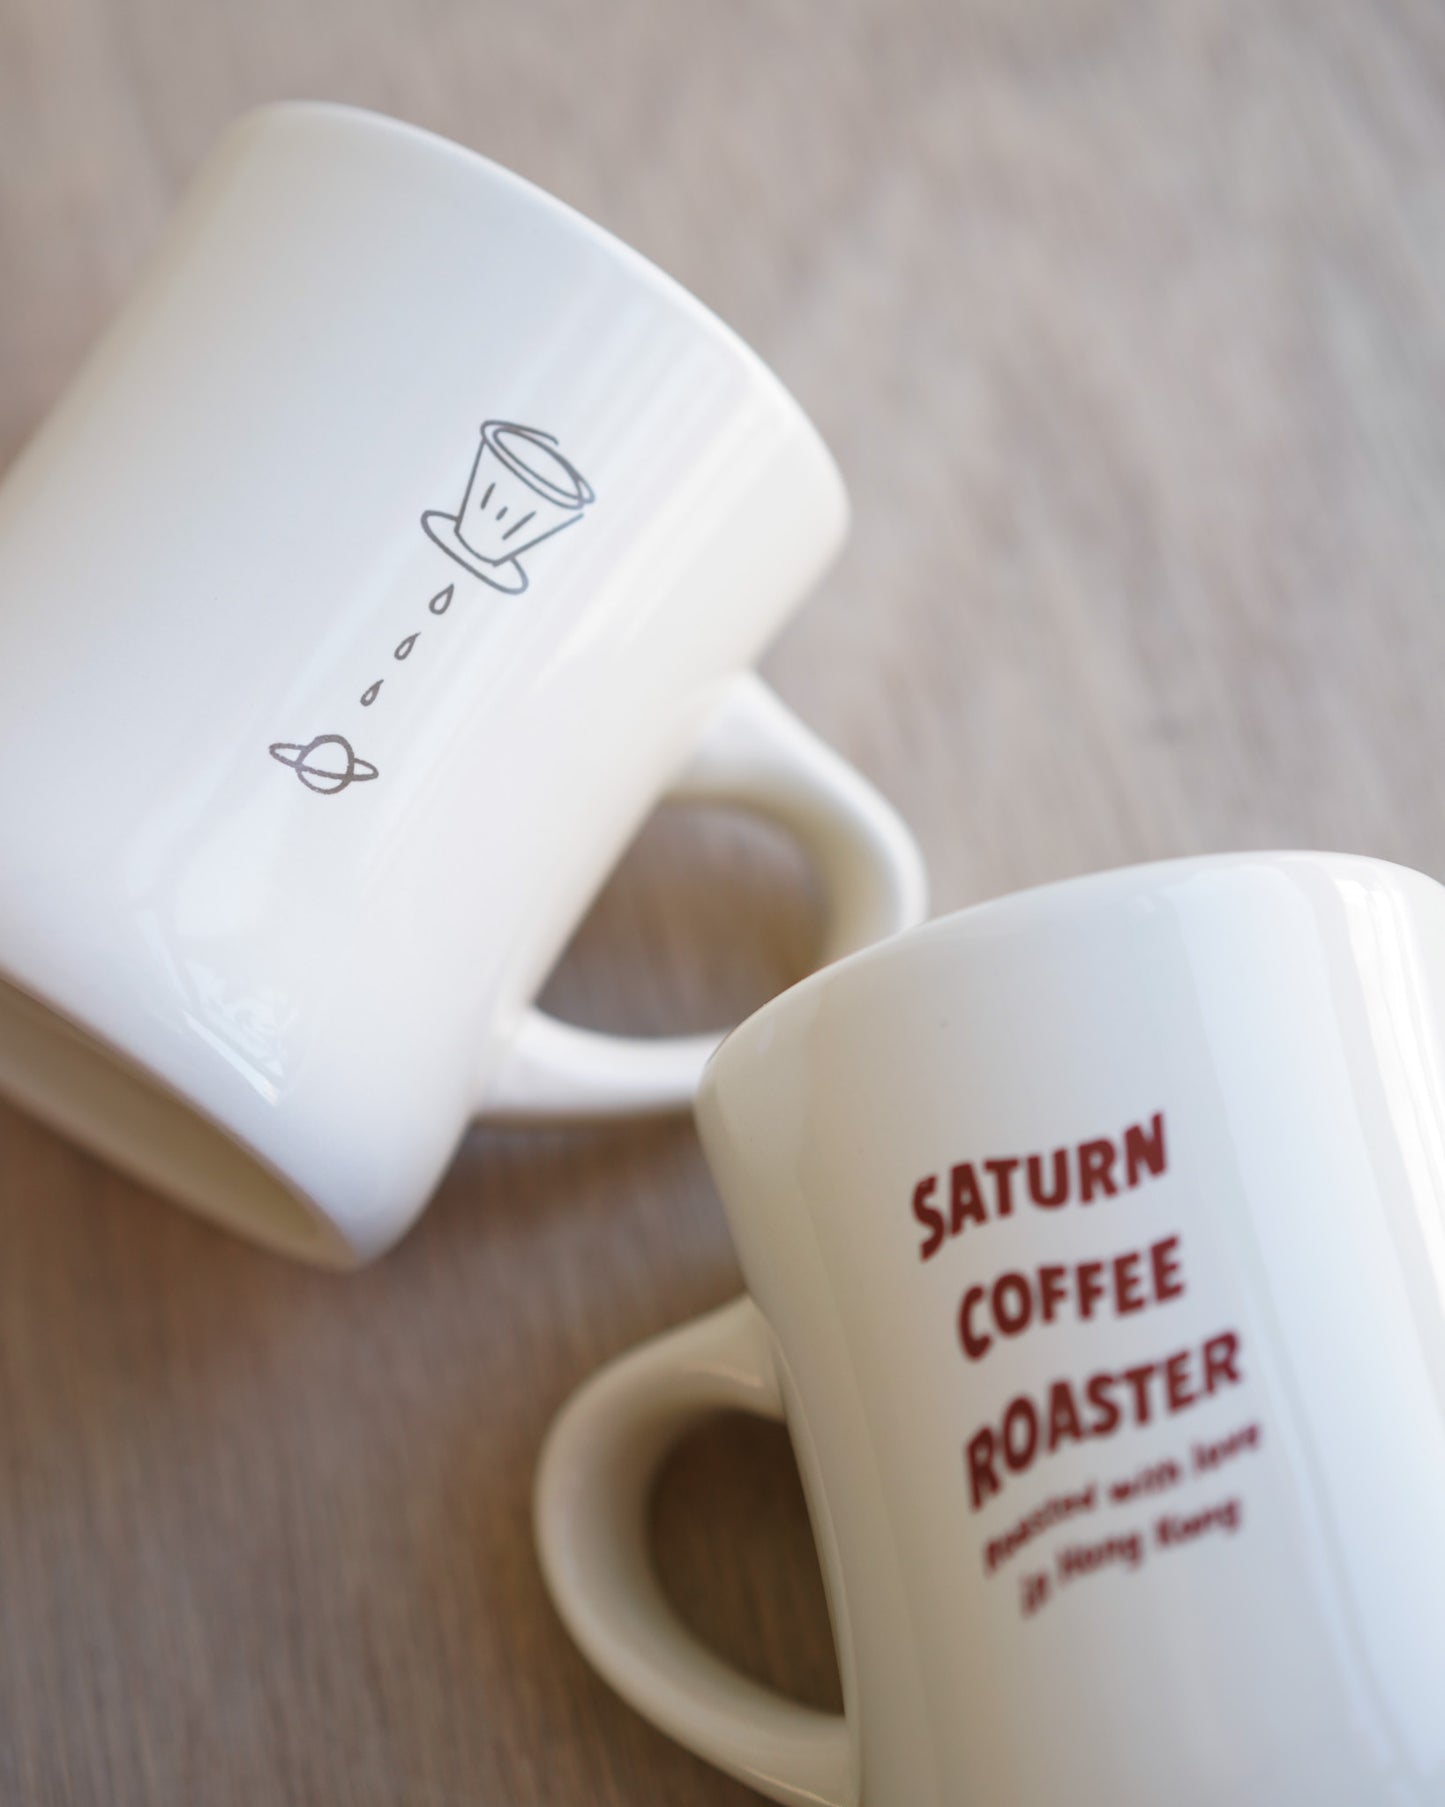 土星陶瓷杯 Saturn Ceramics Mug